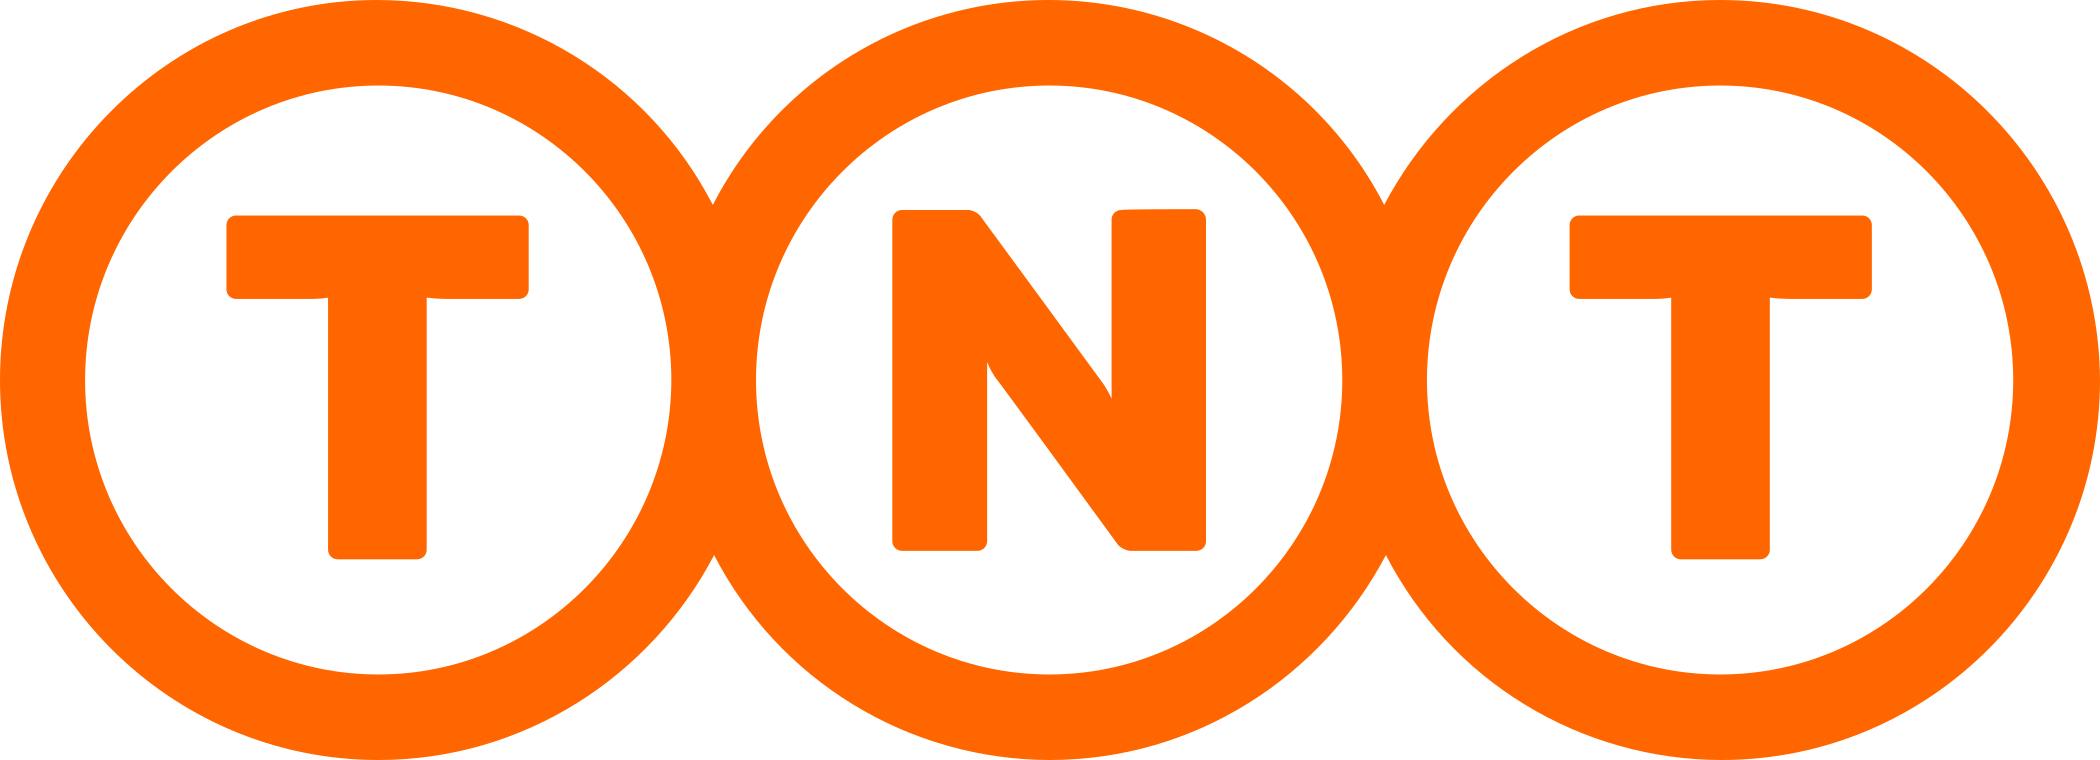 TNT express logo.